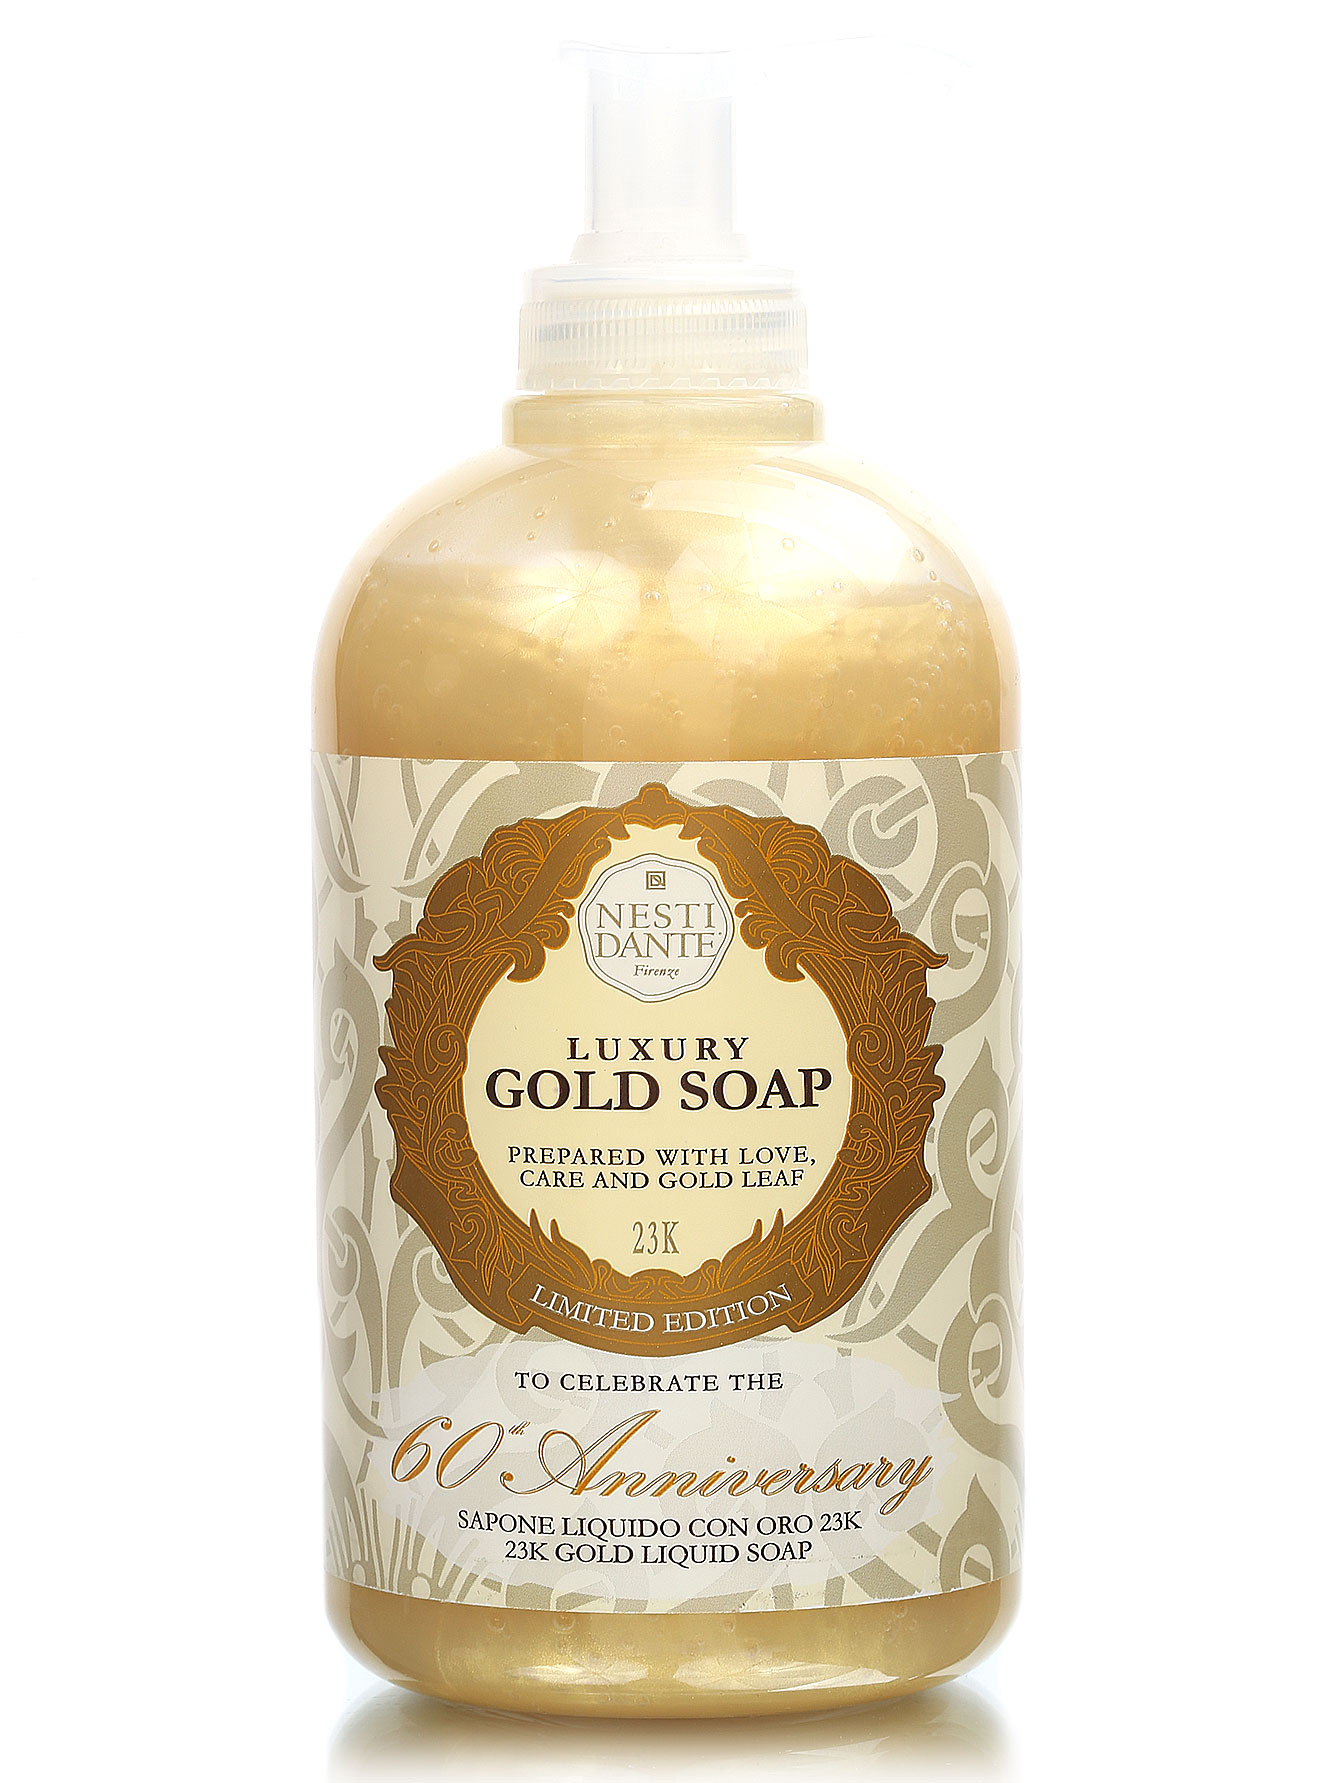 Жидкое мыло Gold Soap 60-th Anniversary, 500 мл - Общий вид